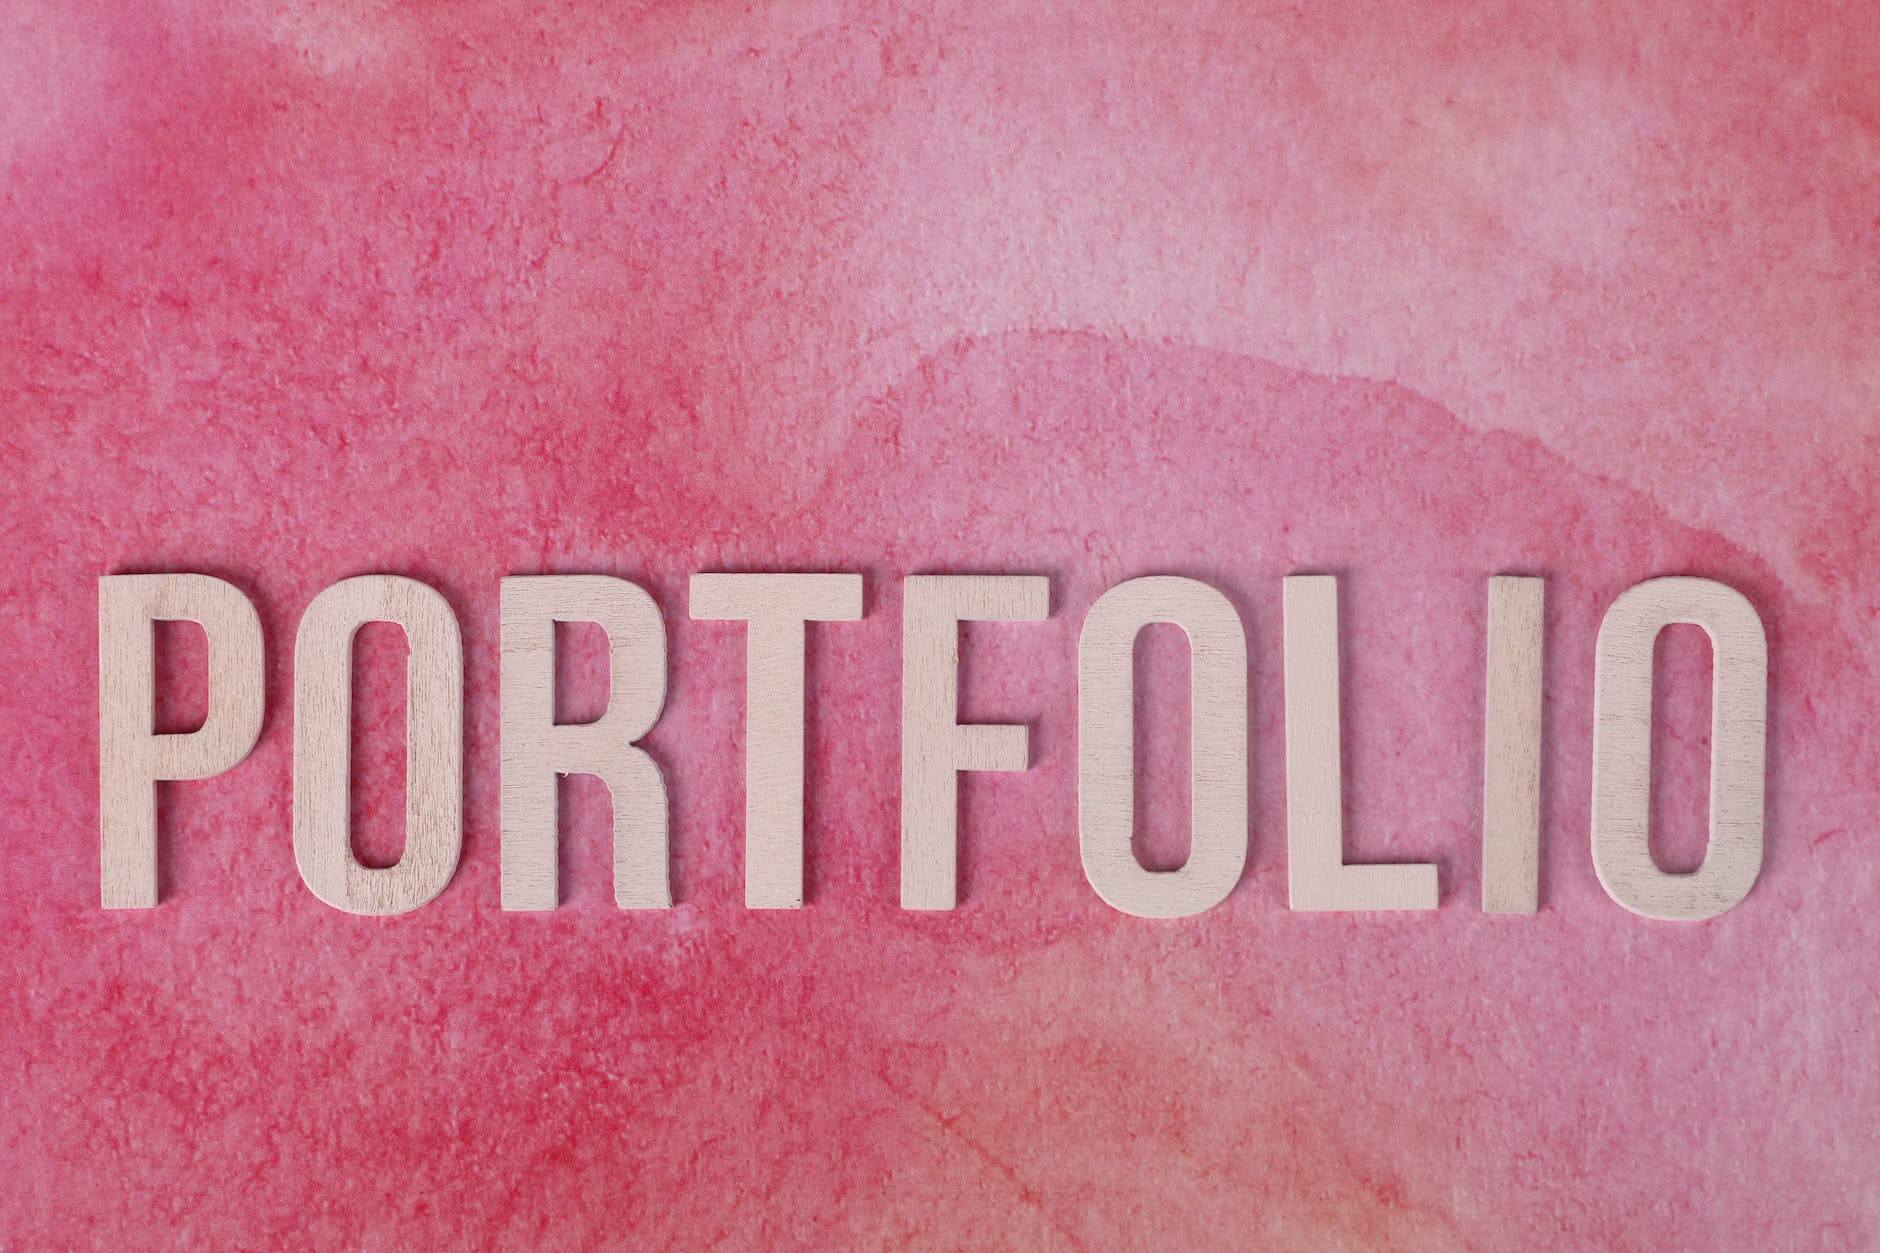 portfolio text on pink background